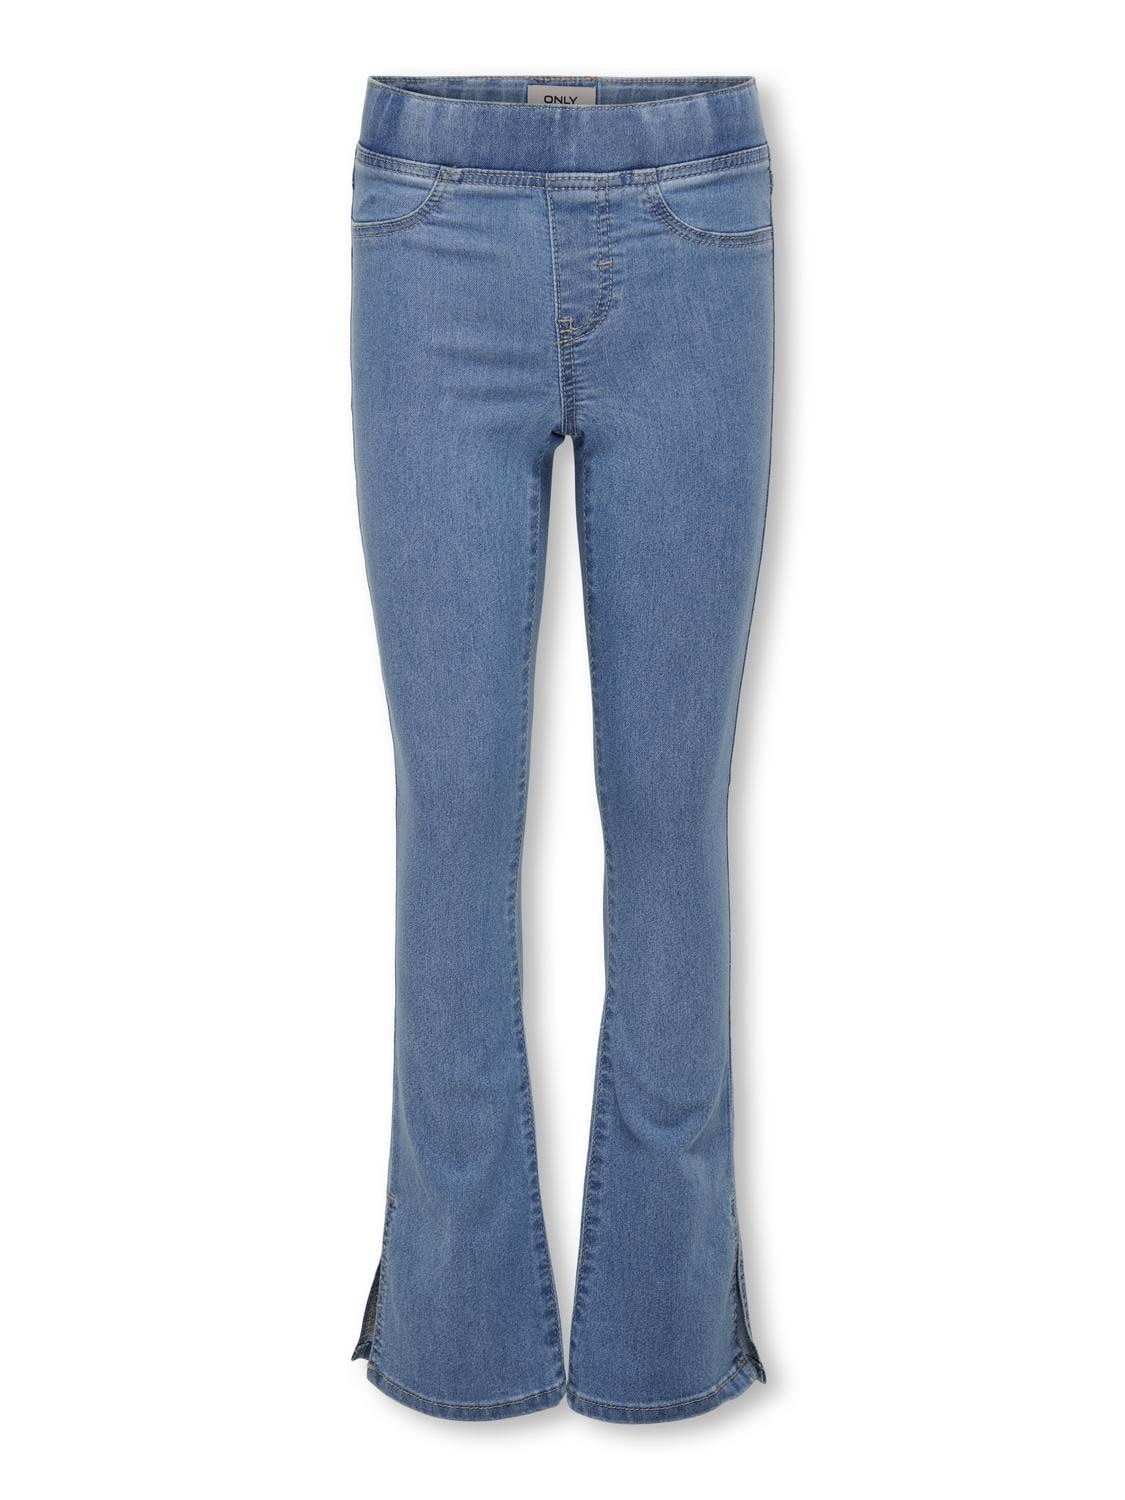 KIDS ONLY Skinny-fit-Jeans »KOGMIST SKINNY FLARE...